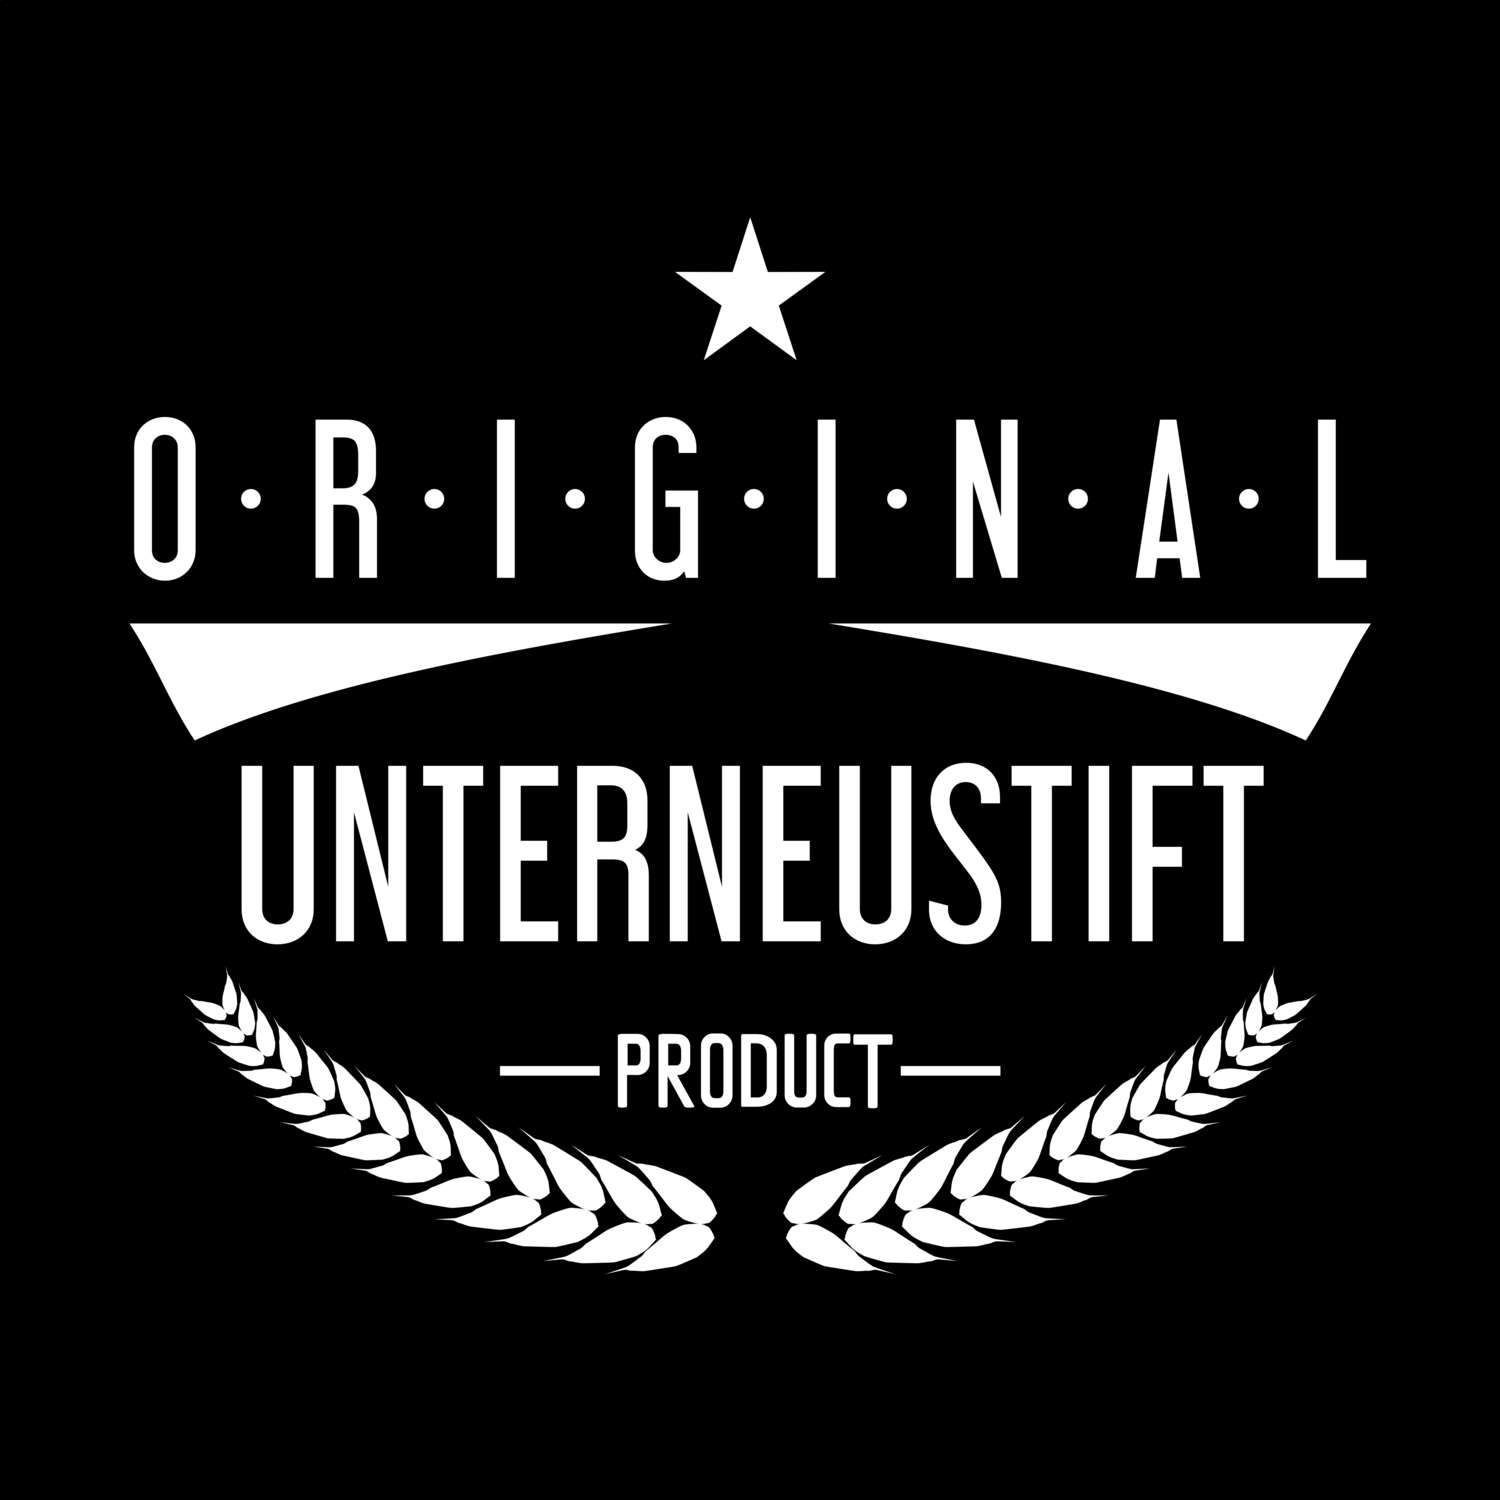 Unterneustift T-Shirt »Original Product«